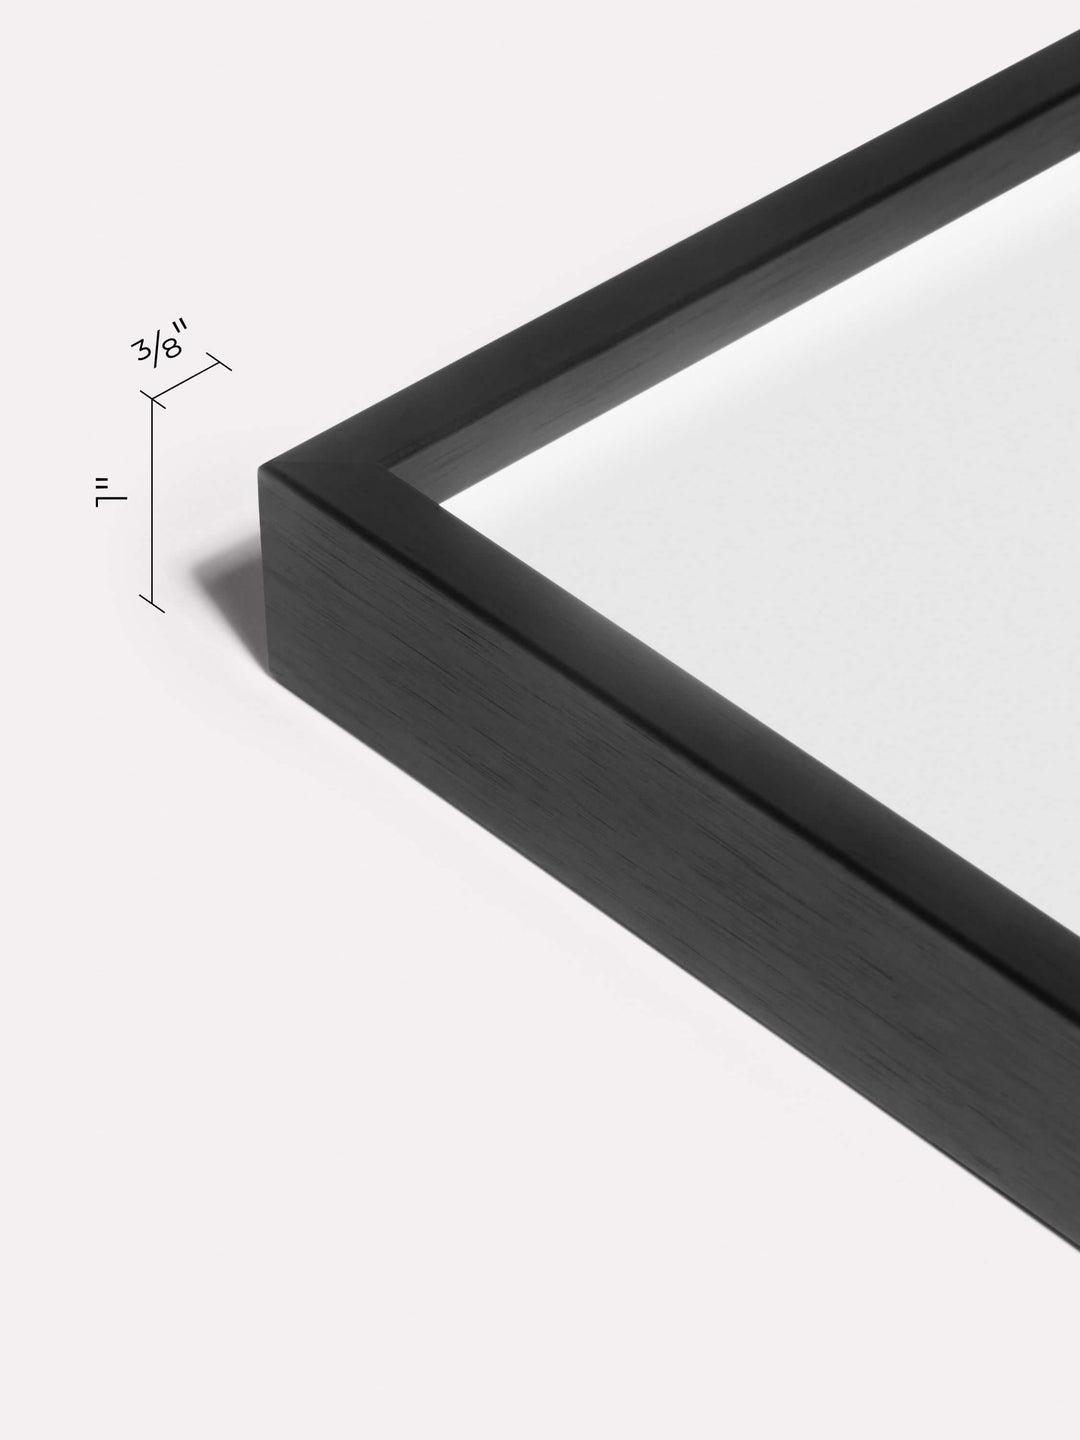 16x16-inch Thin Frame, Black - Close-up view